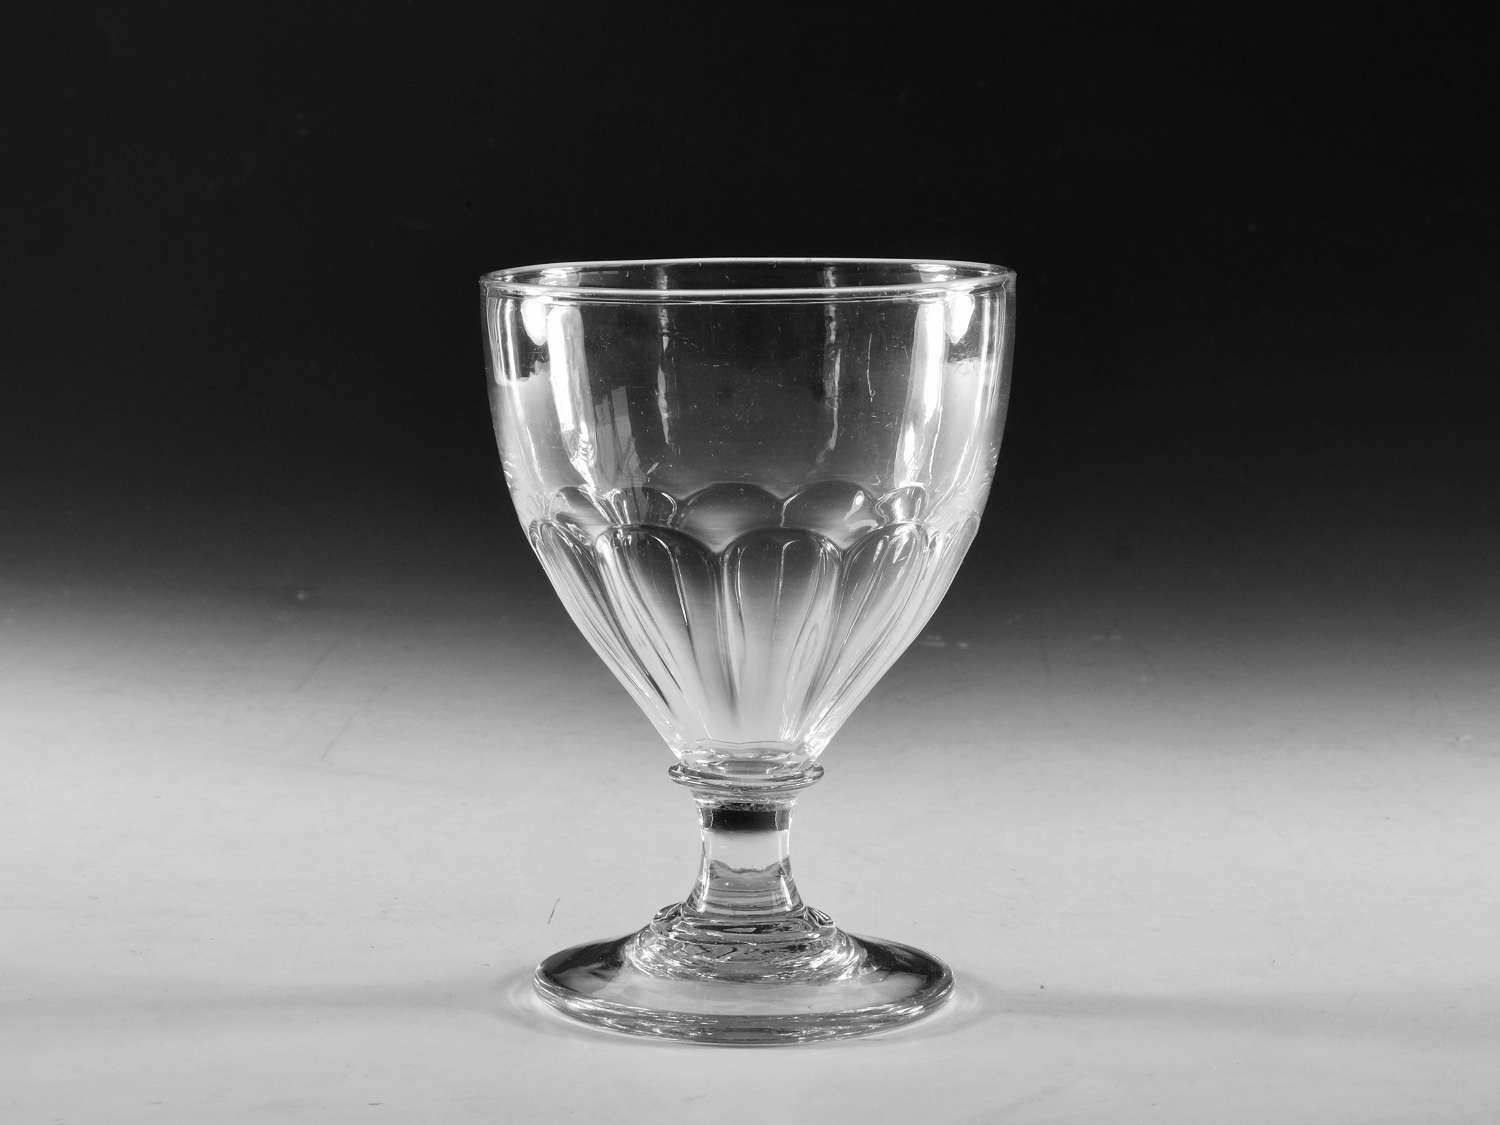 Antique glass rummer English c1800